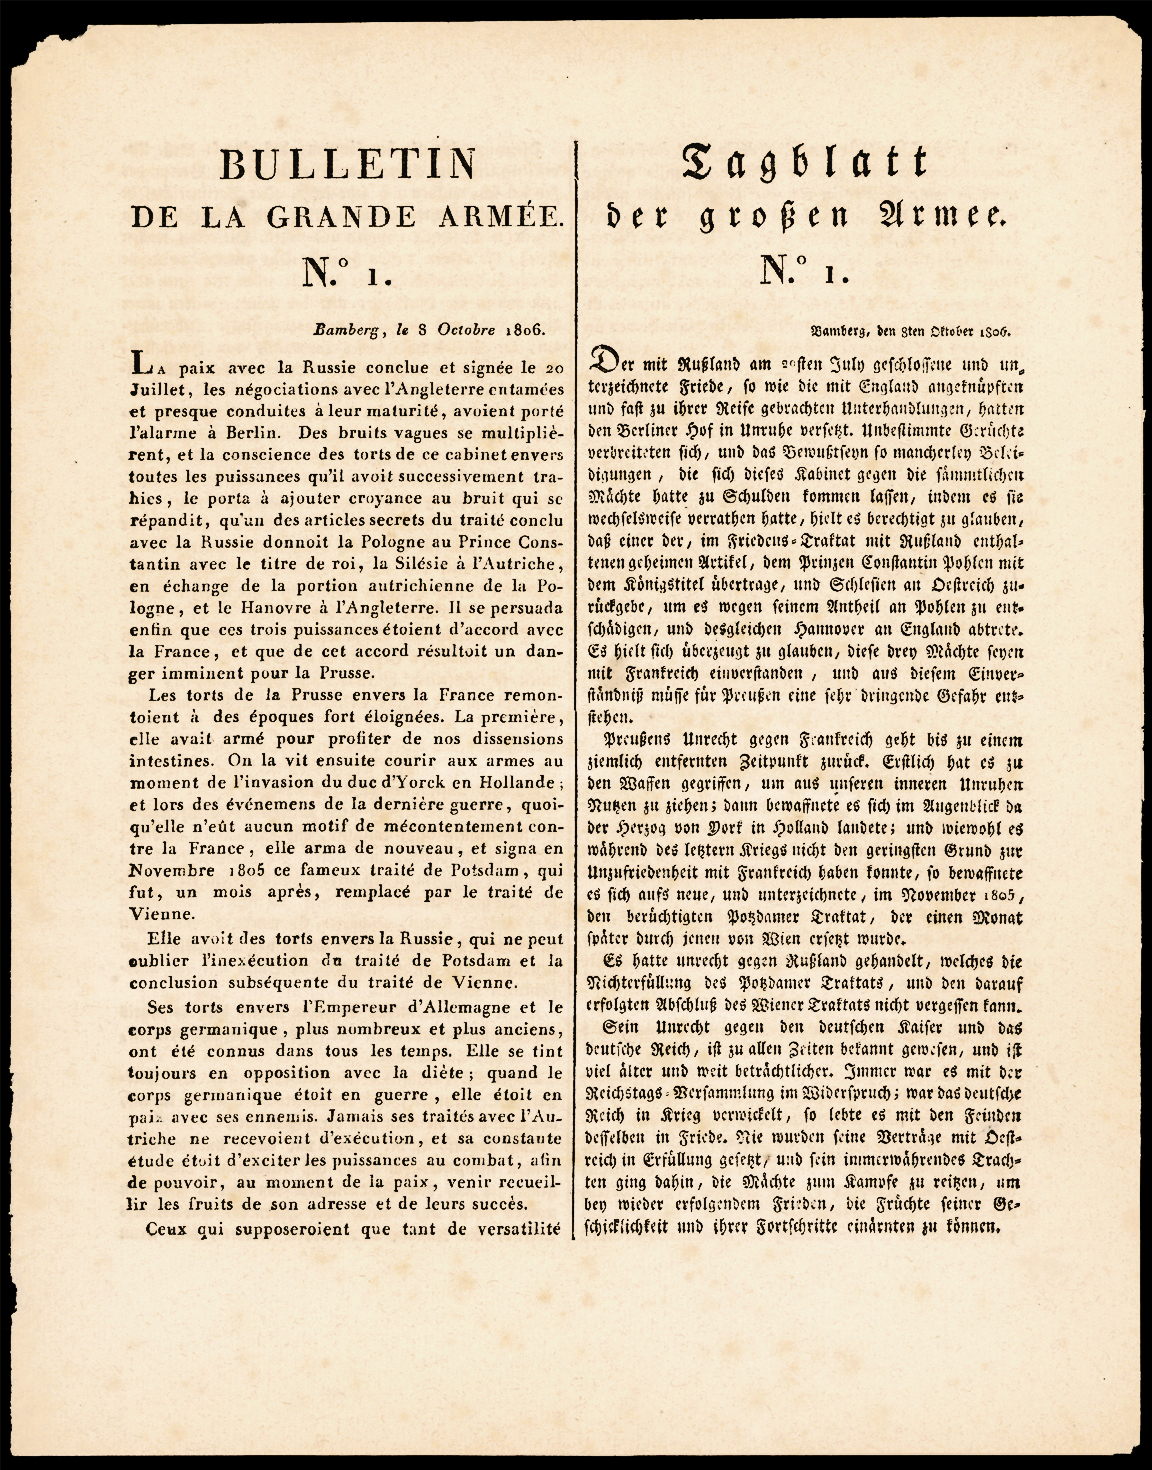 Referenz: bulletin-no-1-de-la-grande-armee-en-francais-et-en-allemand-bamberg-le-8-octobre-1806